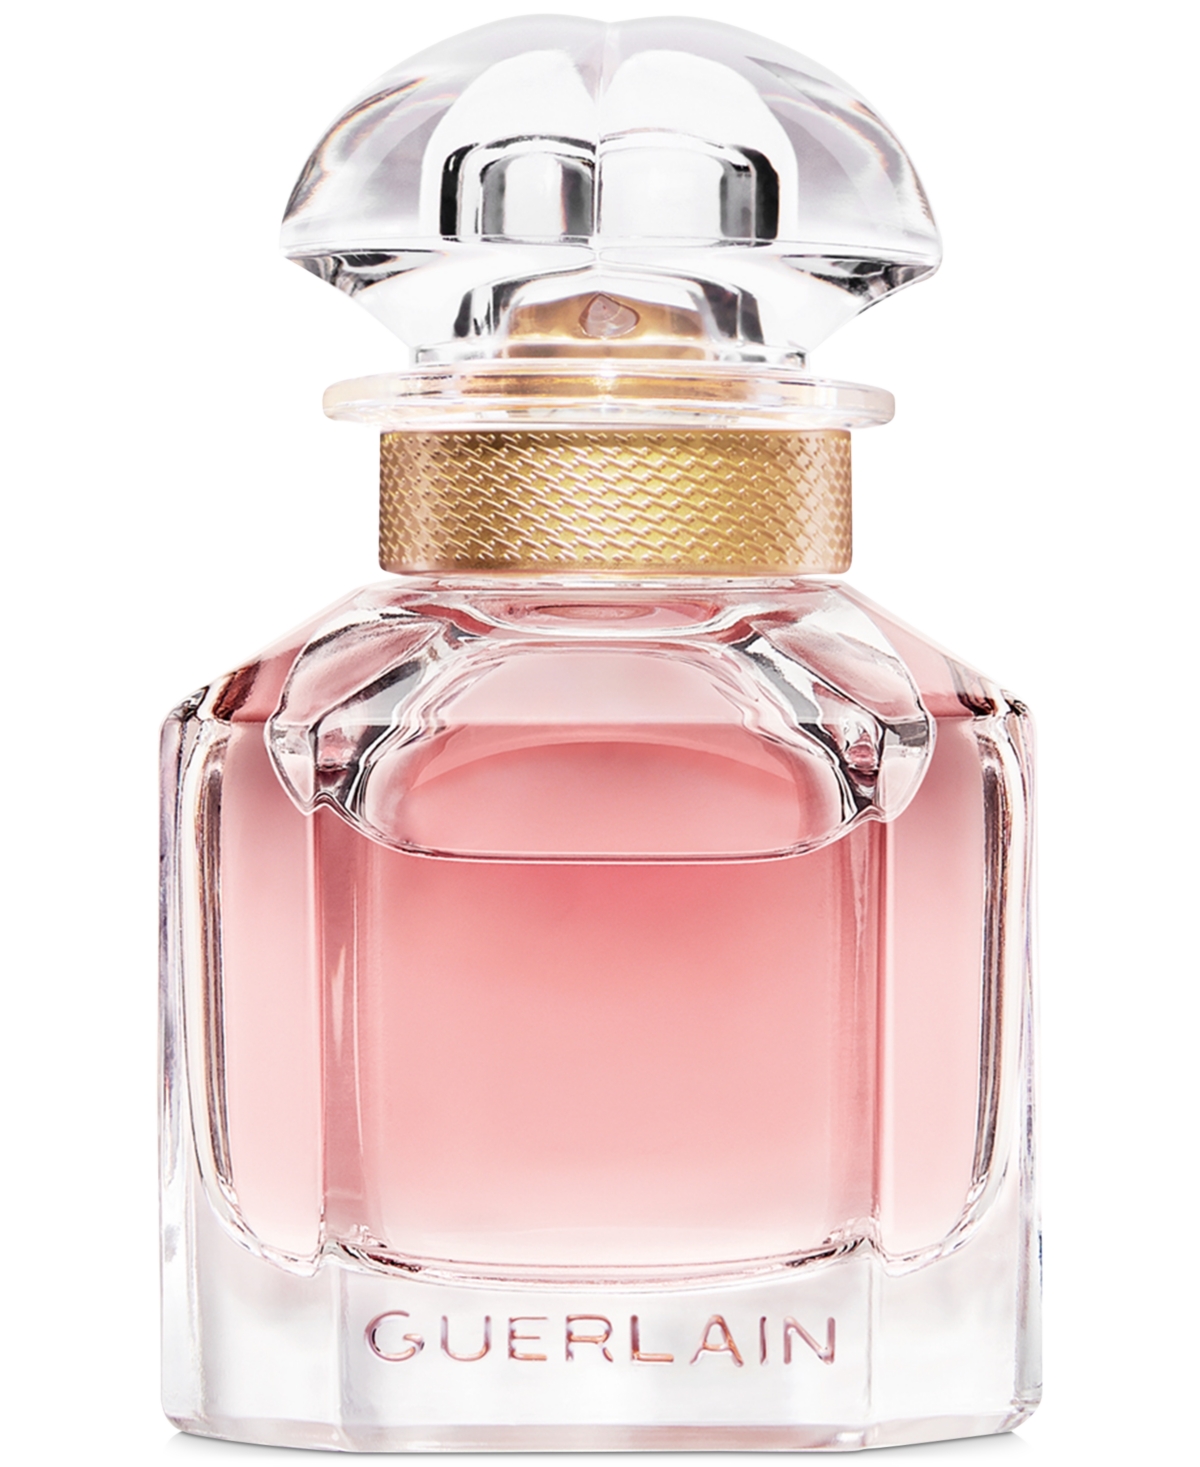 Guerlain Guerlain de Parfum Spray, 3.3 oz. - Macy's